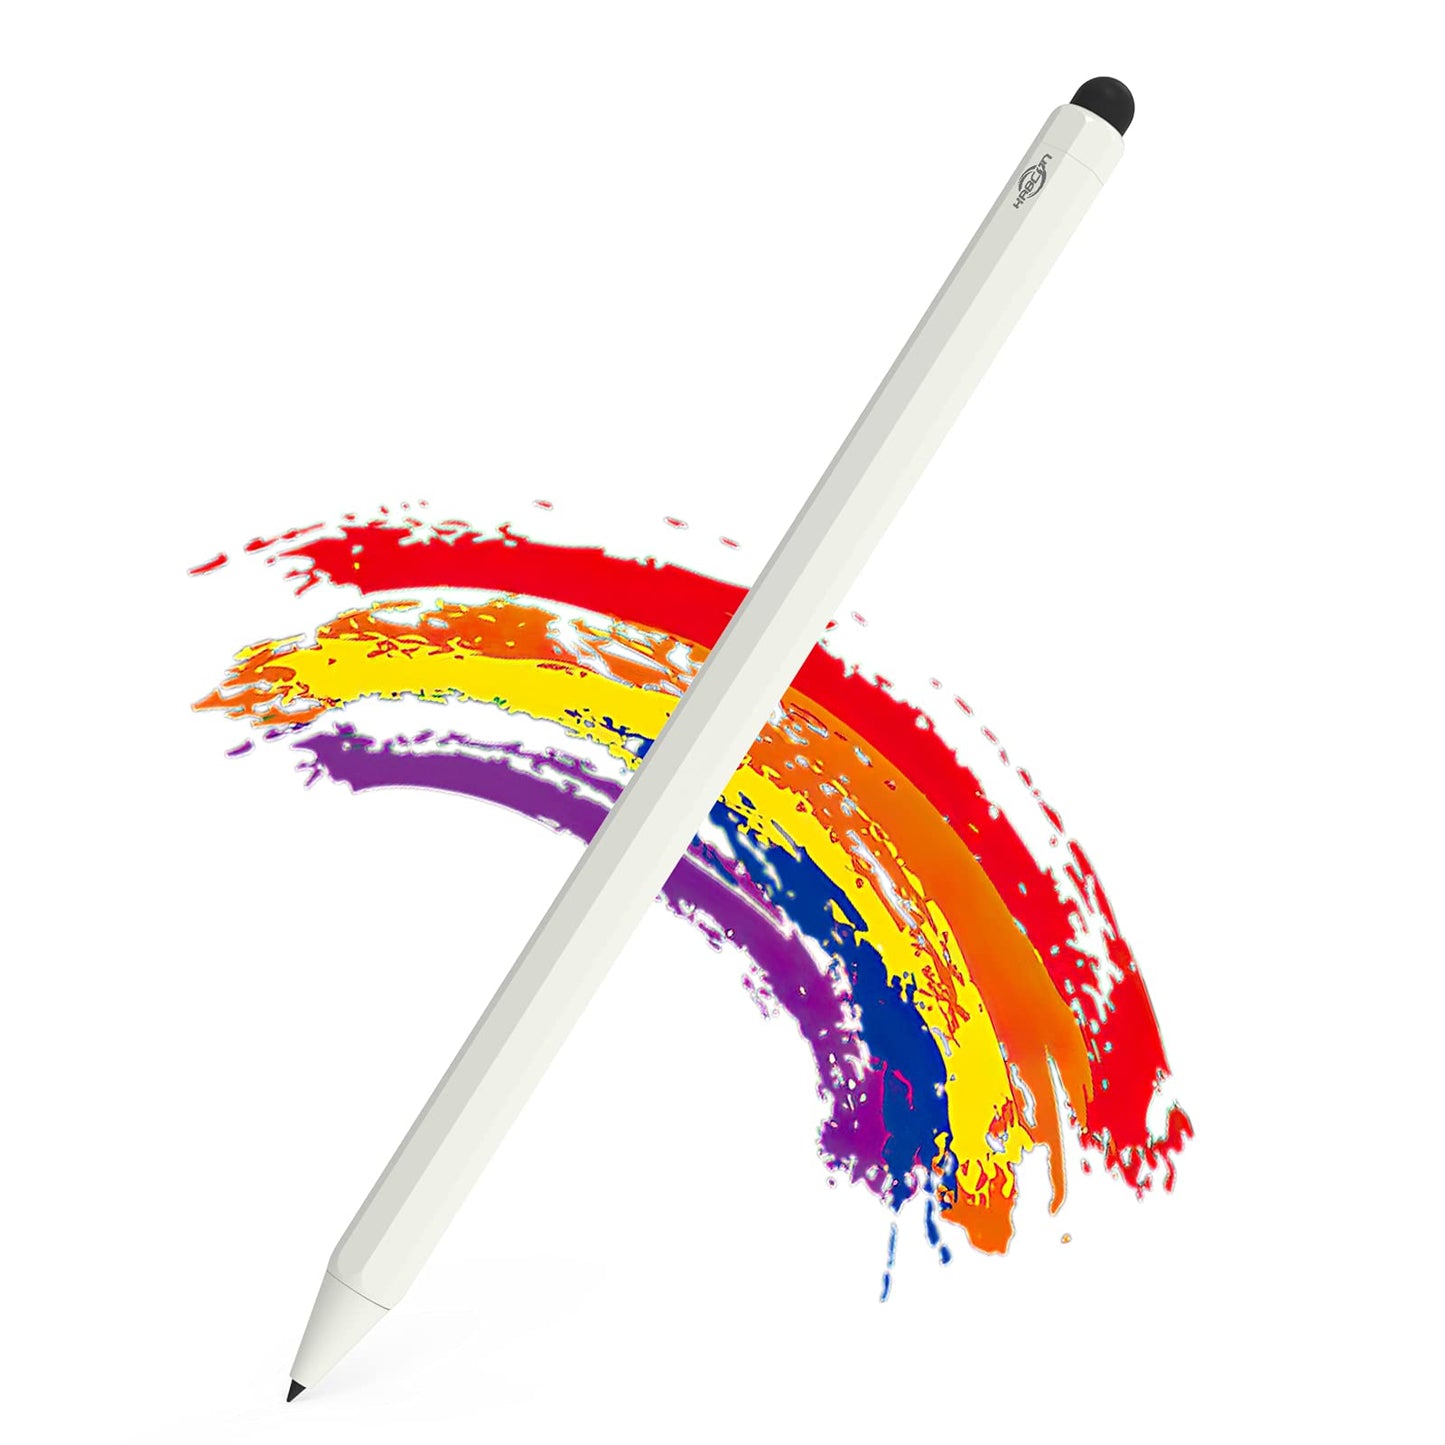 [ship from the US]Stylus Pen for Apple iPad,Palm Rejection Stylist Pencil Digittal Stylus Pen